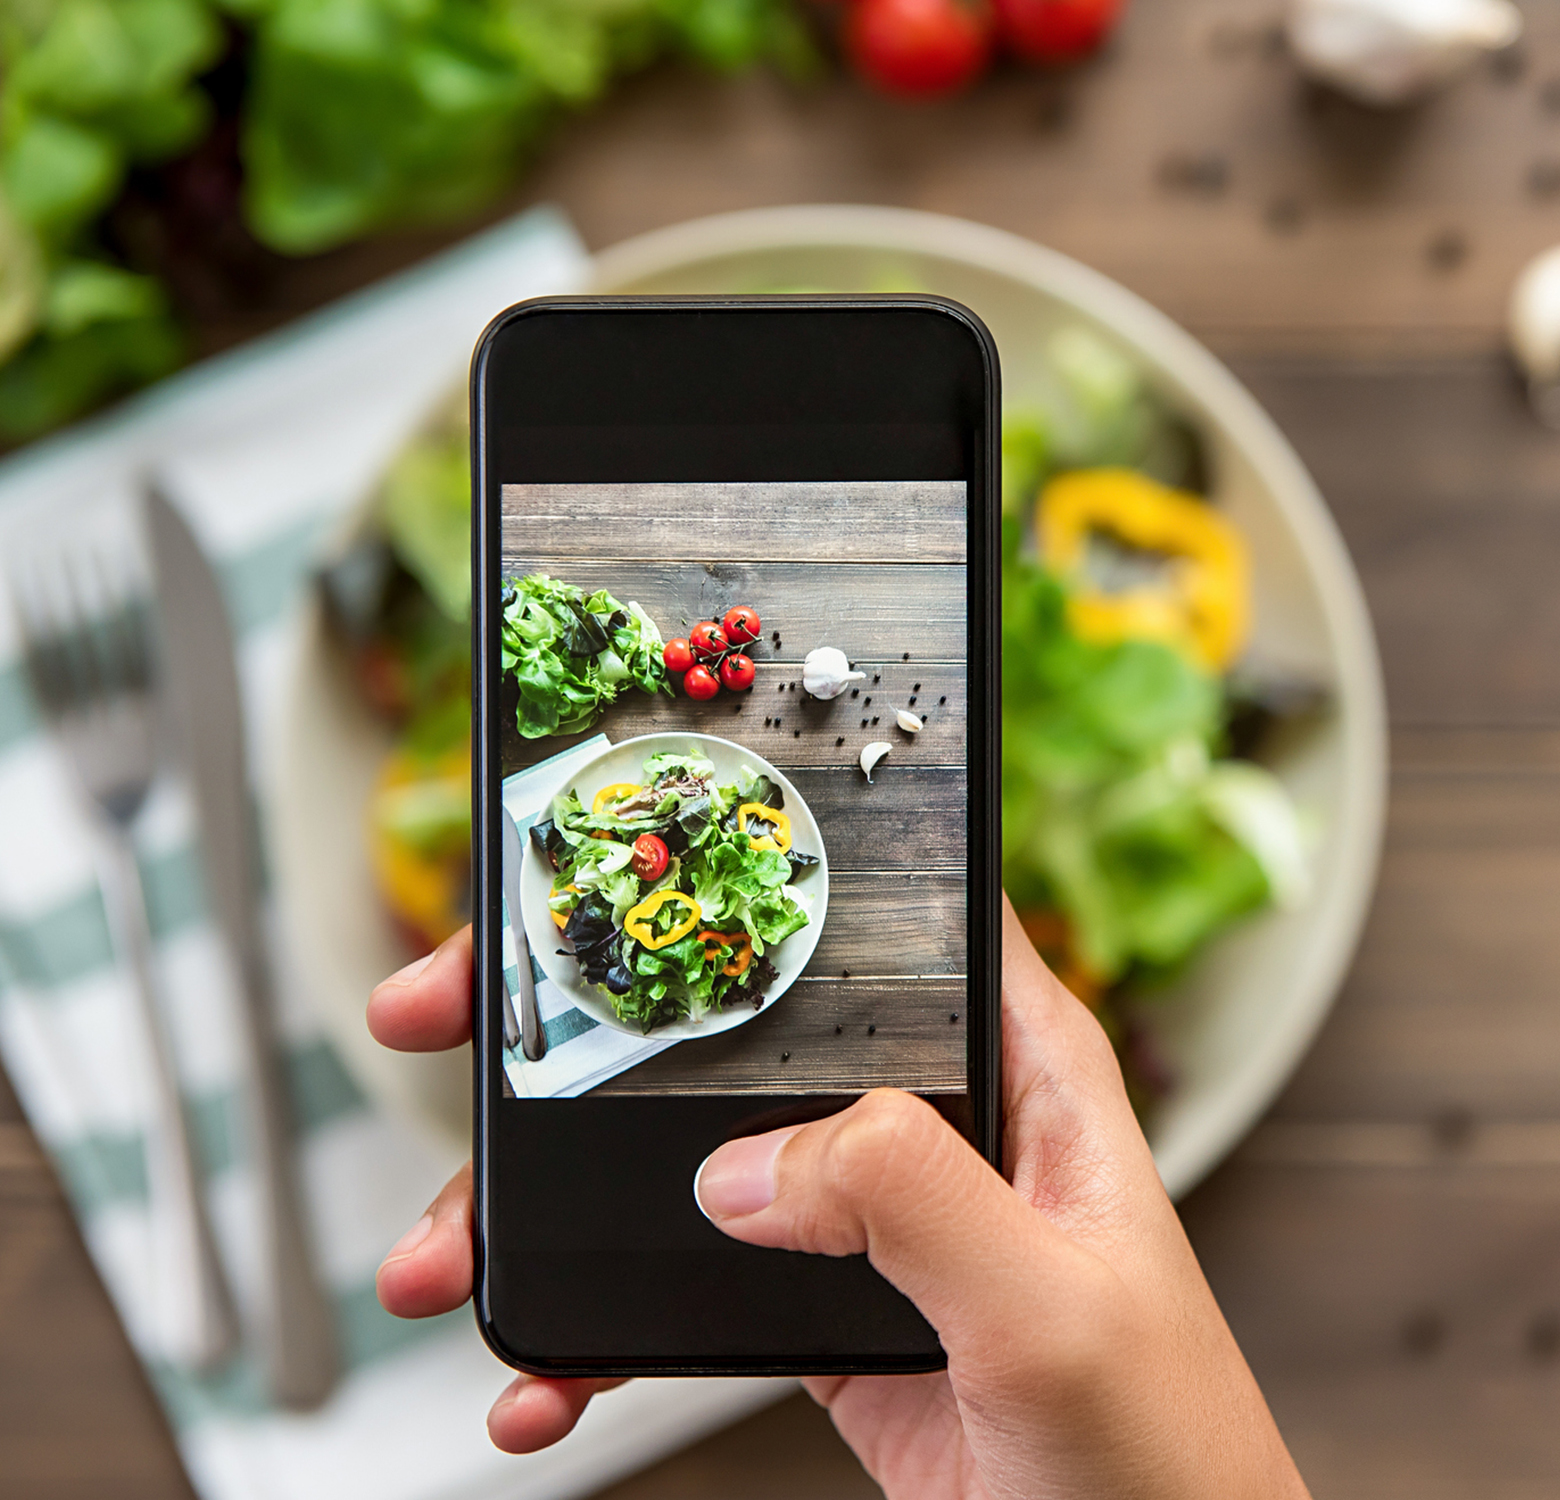 Tendances alimentaires médias sociaux | Food trends on social media